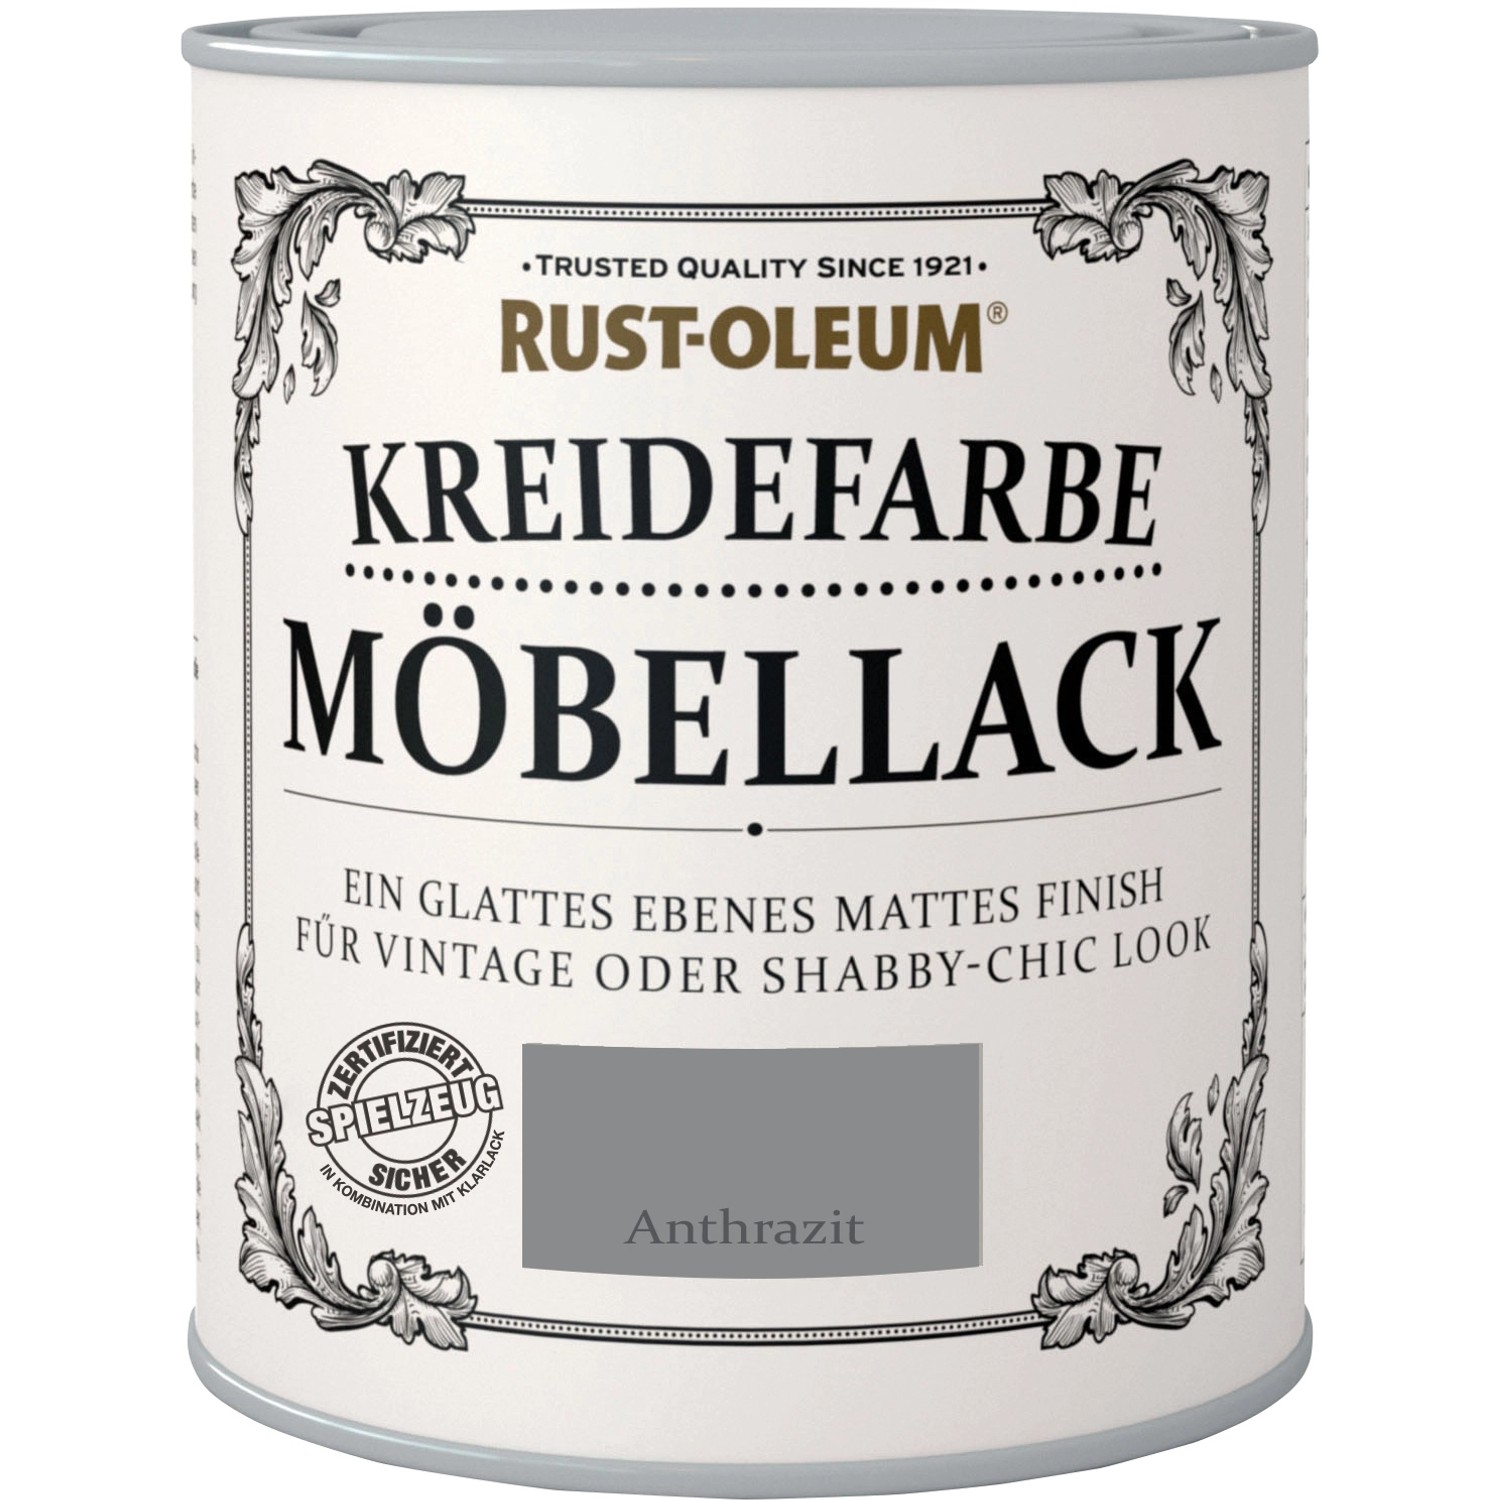 Rust-Oleum Kreidefarbe Möbellack Anthrazit Matt 750 ml von Rust-Oleum